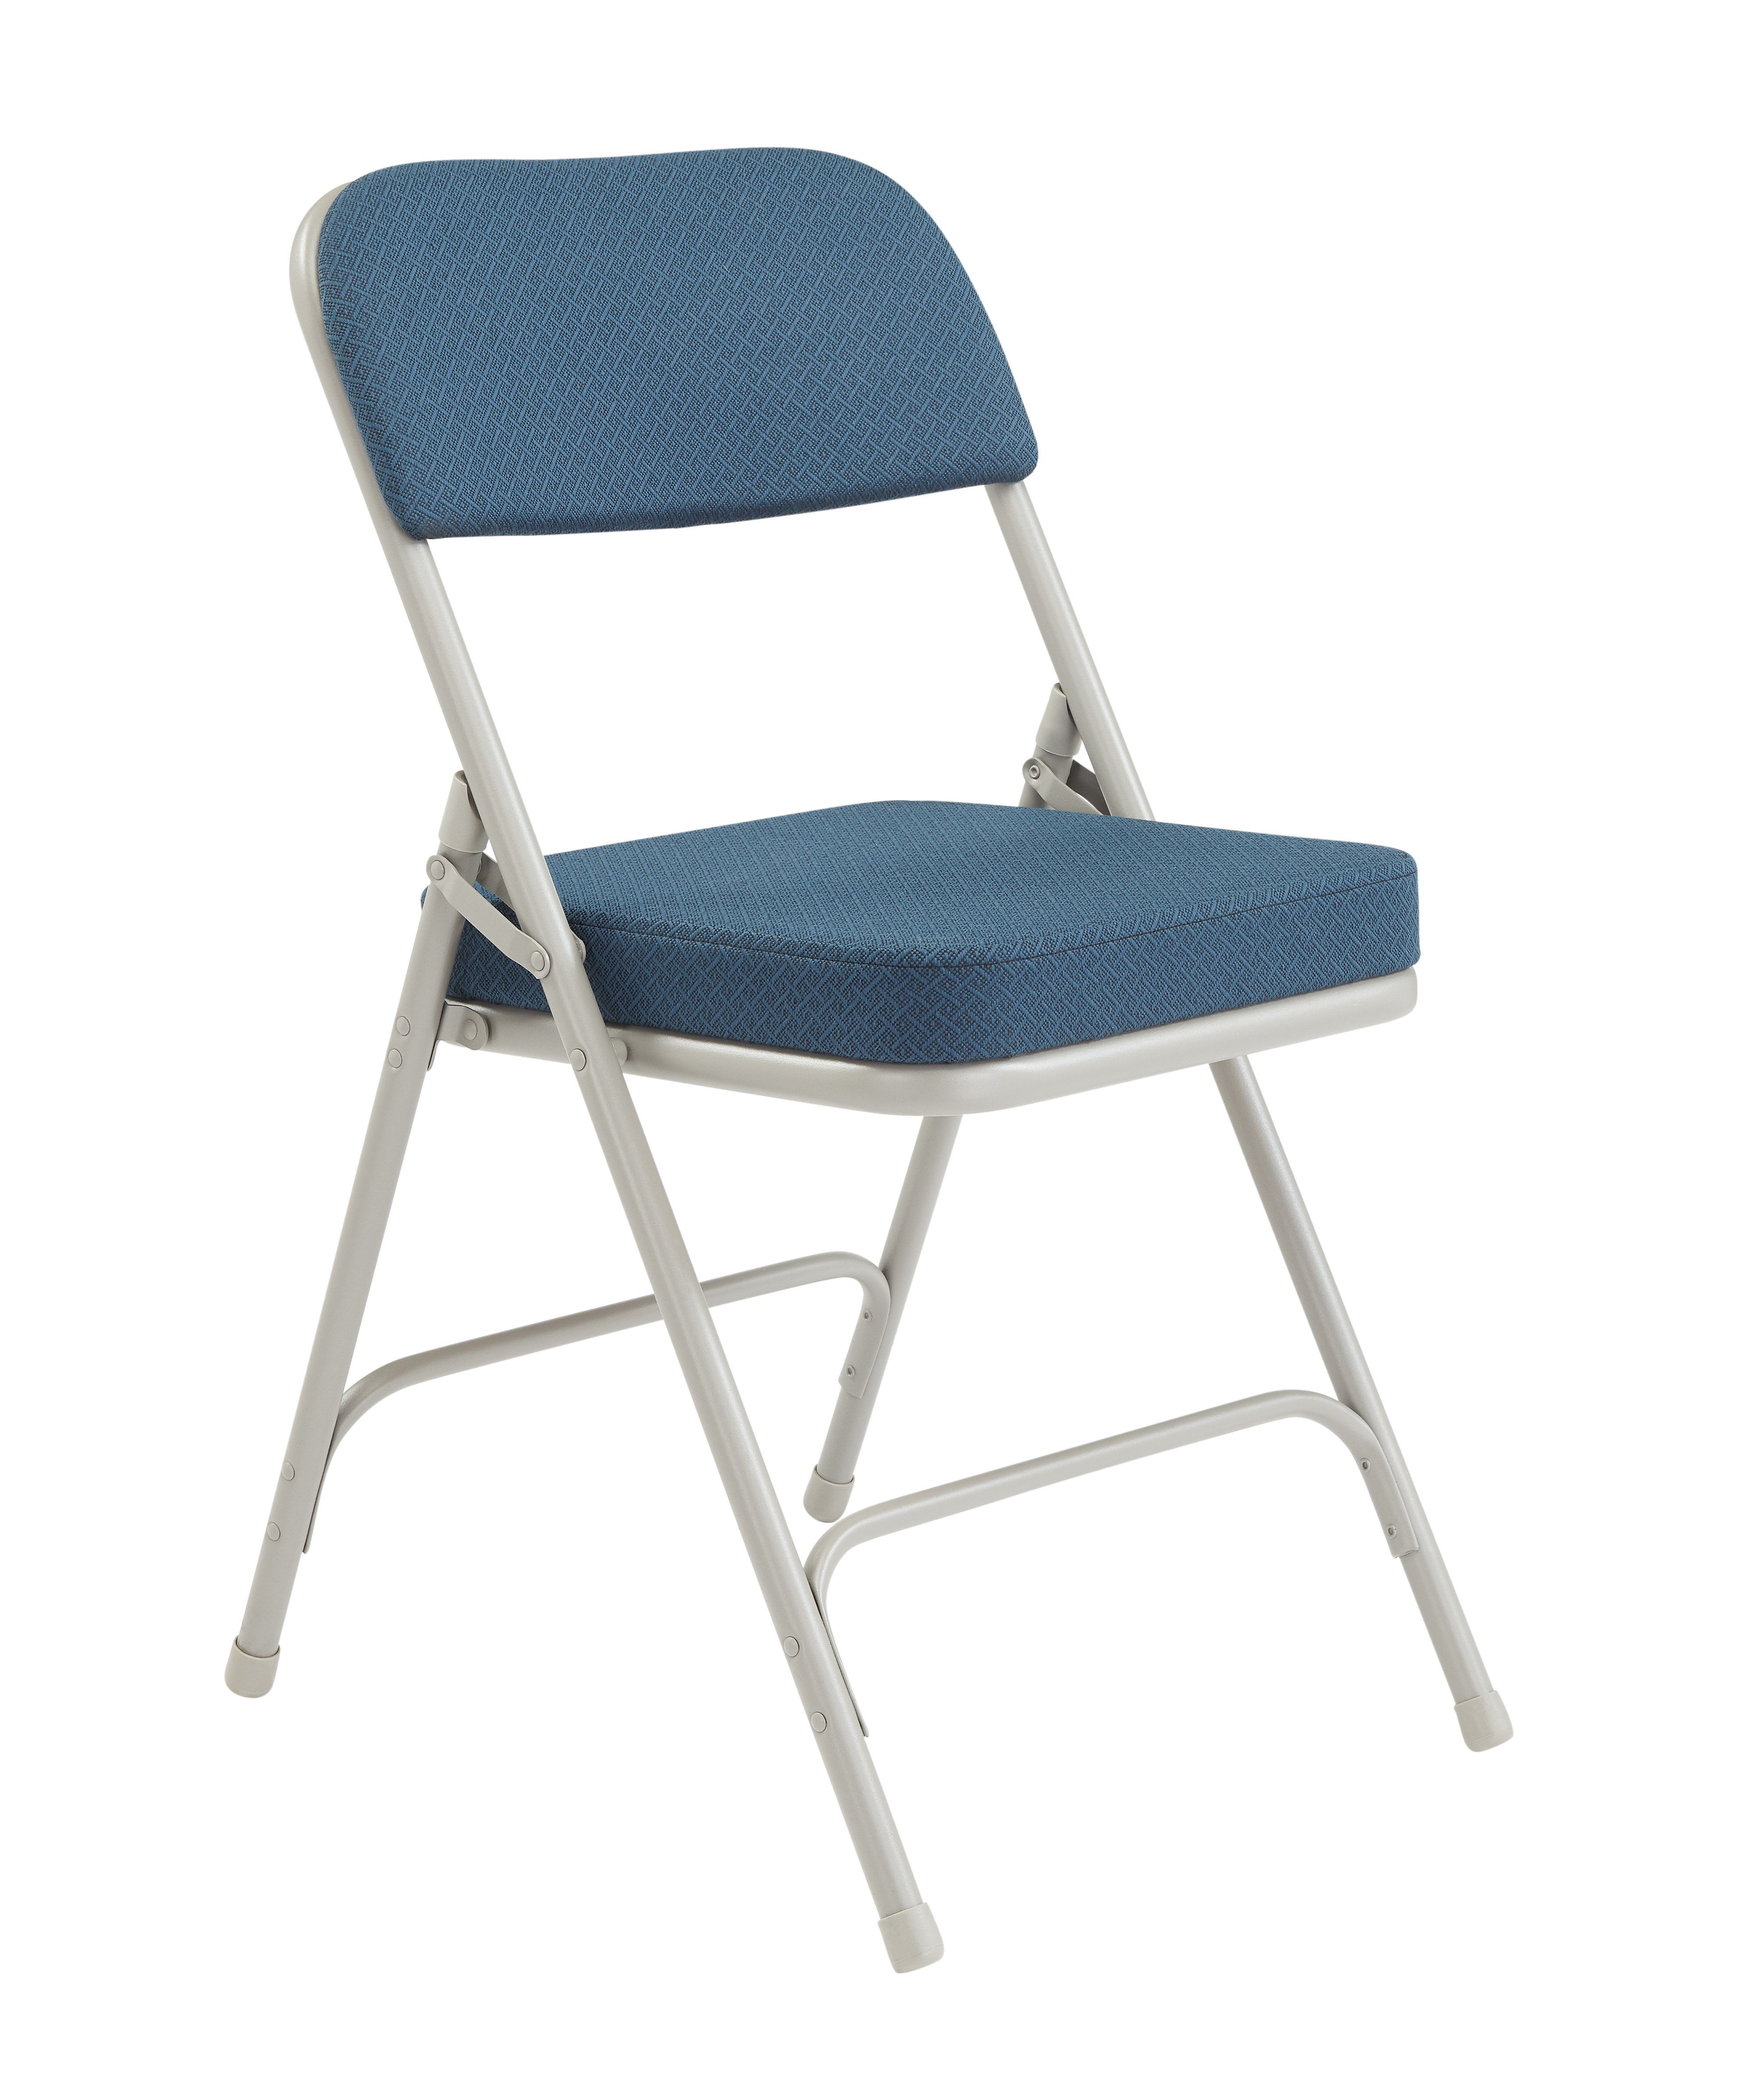 NPS 3215 Premium Blue Fabric Padded Folding Chair